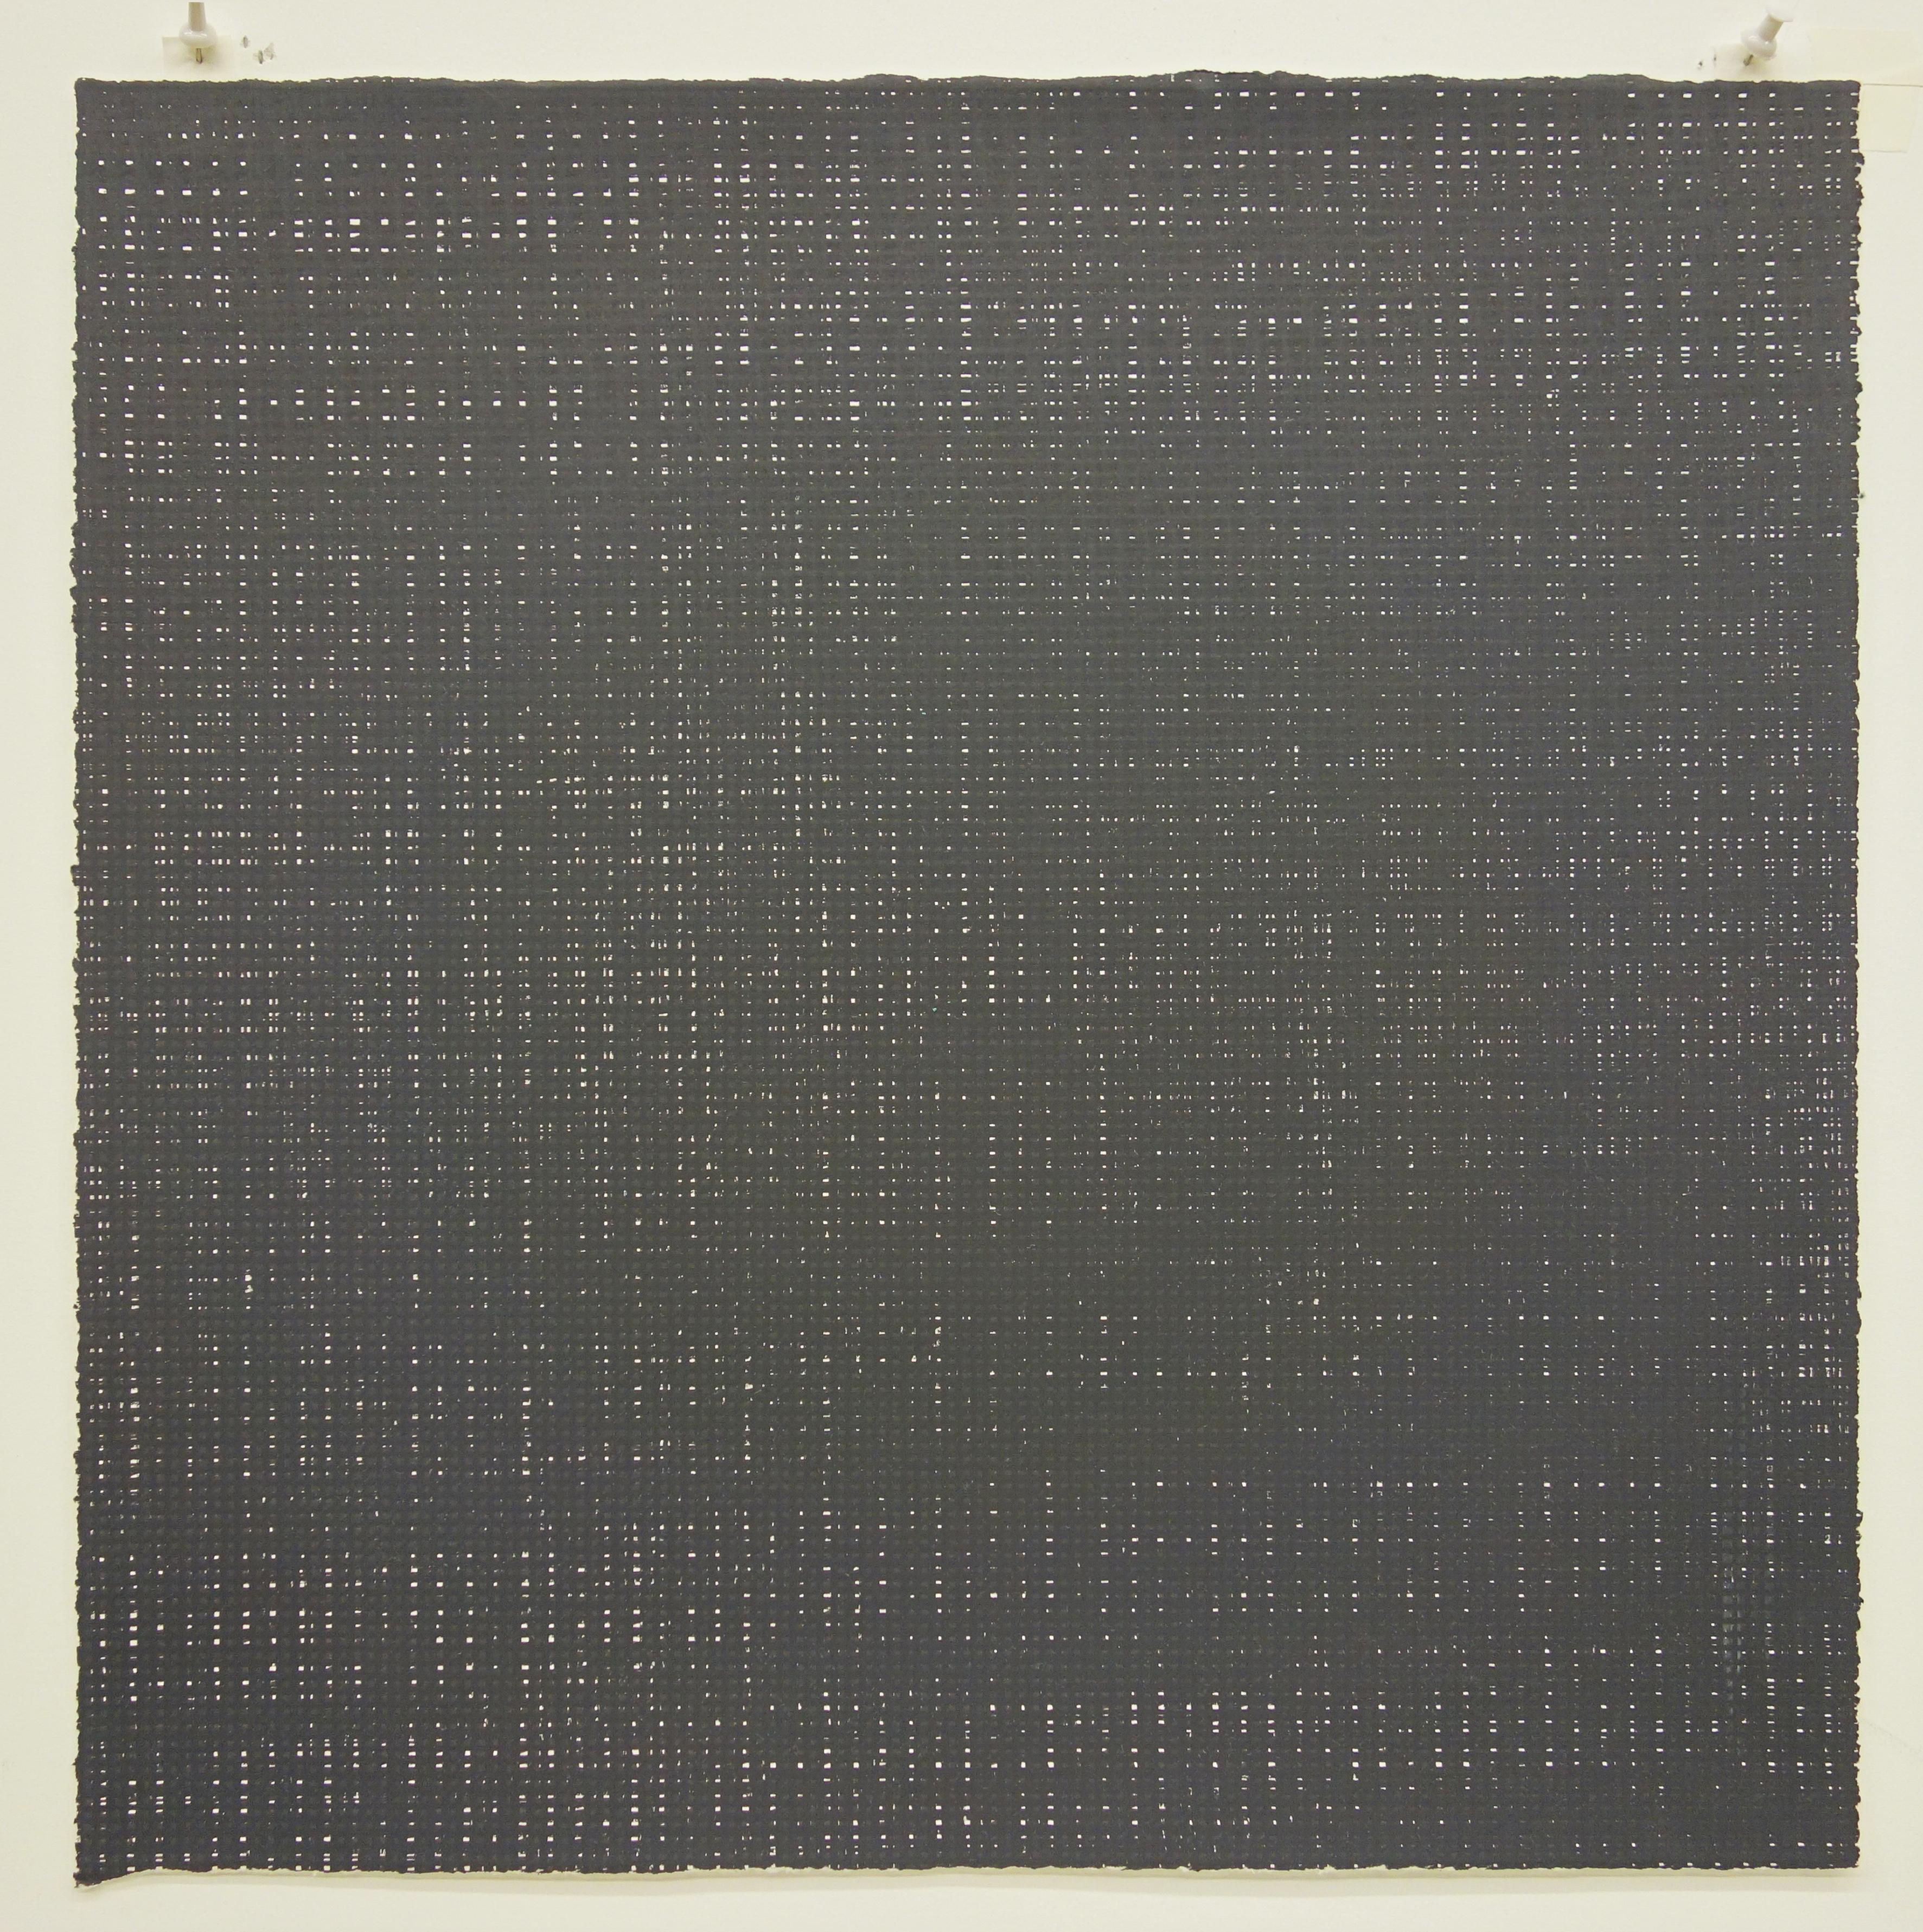 Rob de Oude, Untitled-Wassaic 10, 2016, silkscreen, 18 x 18 inches, Suite of 10 1